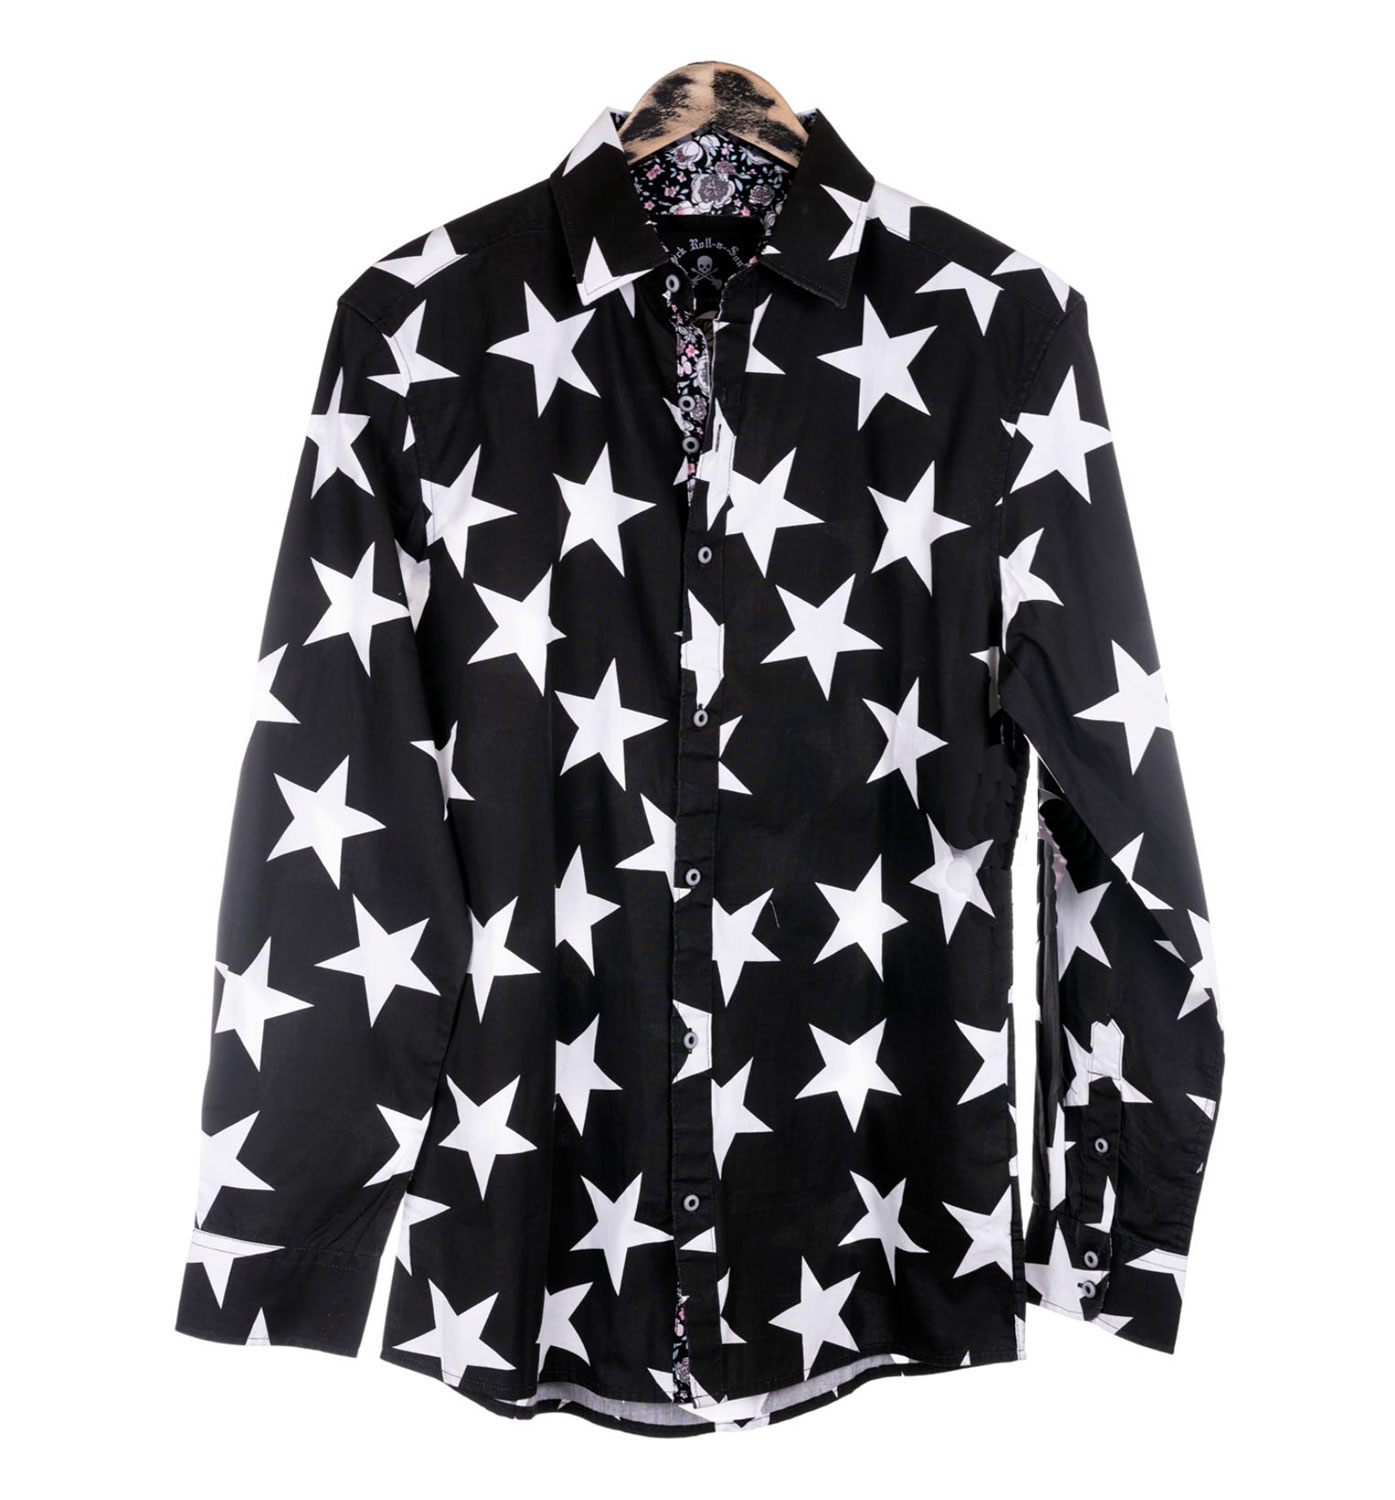 Rock Roll n Soul Starman L/S Shirt - Black/White : Delicious Boutique